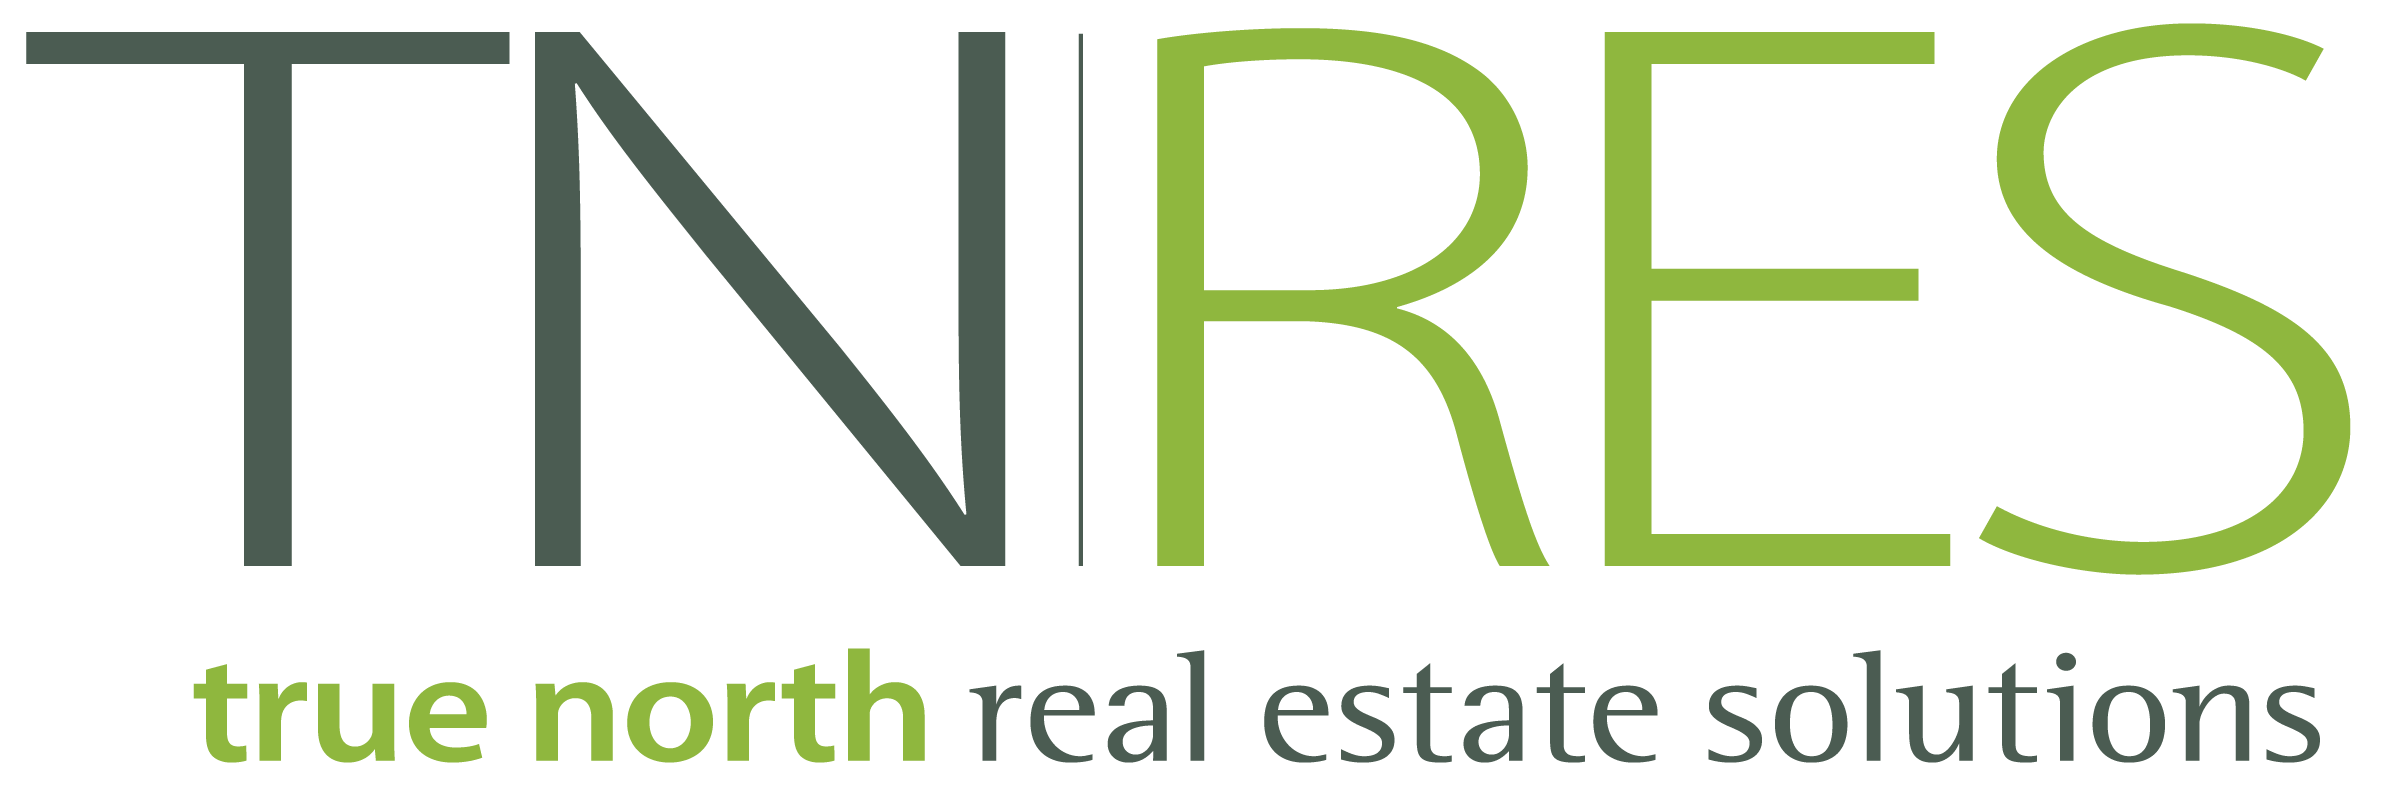 True North Real Estate Solutions